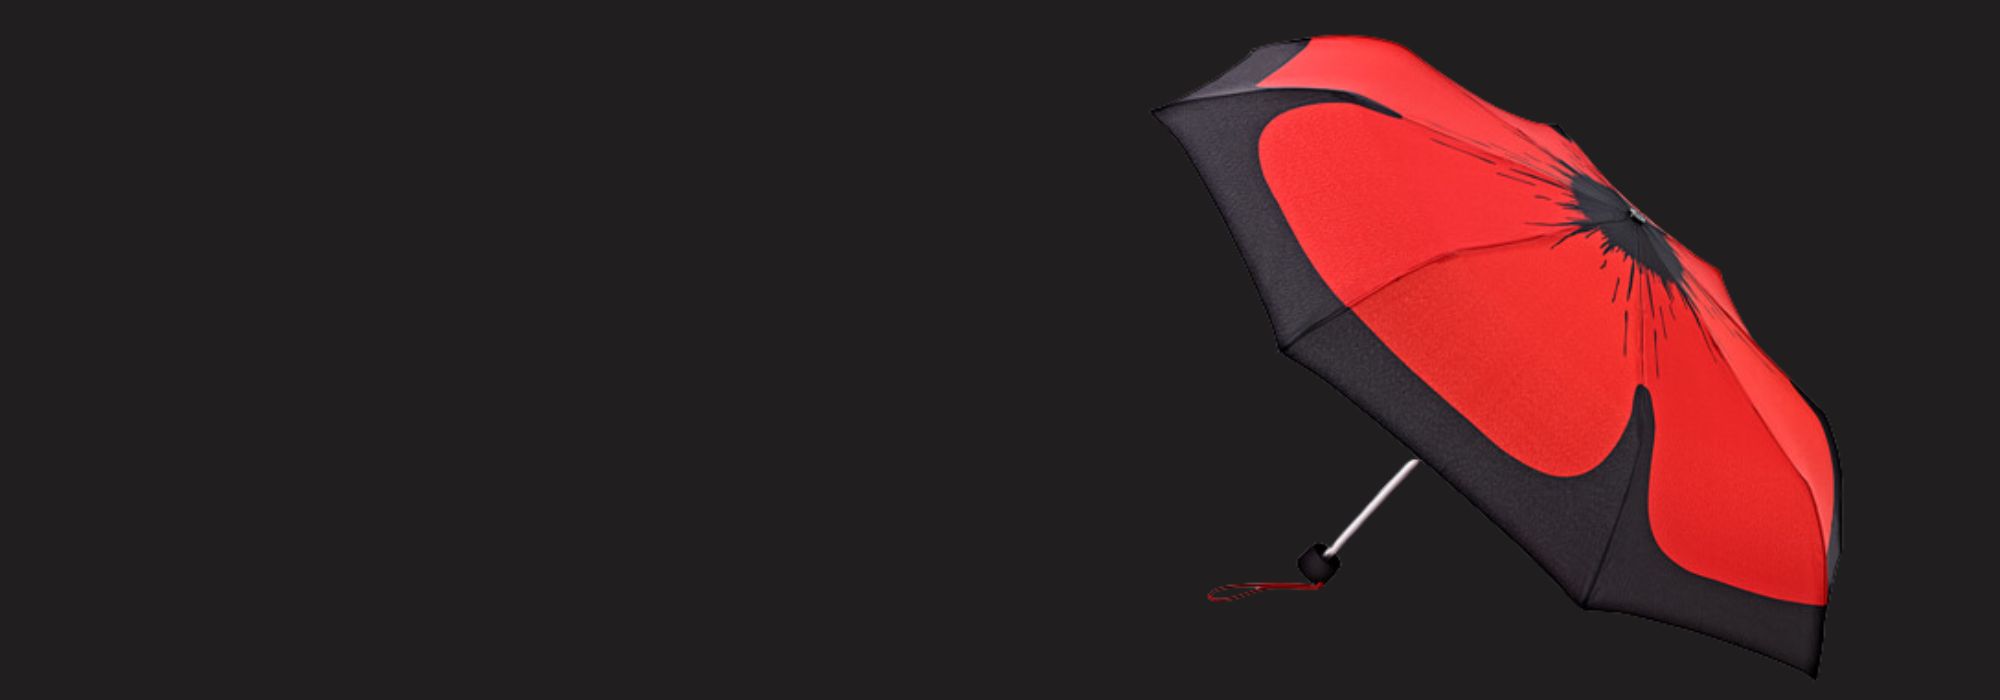 image of a poppy umbrella.